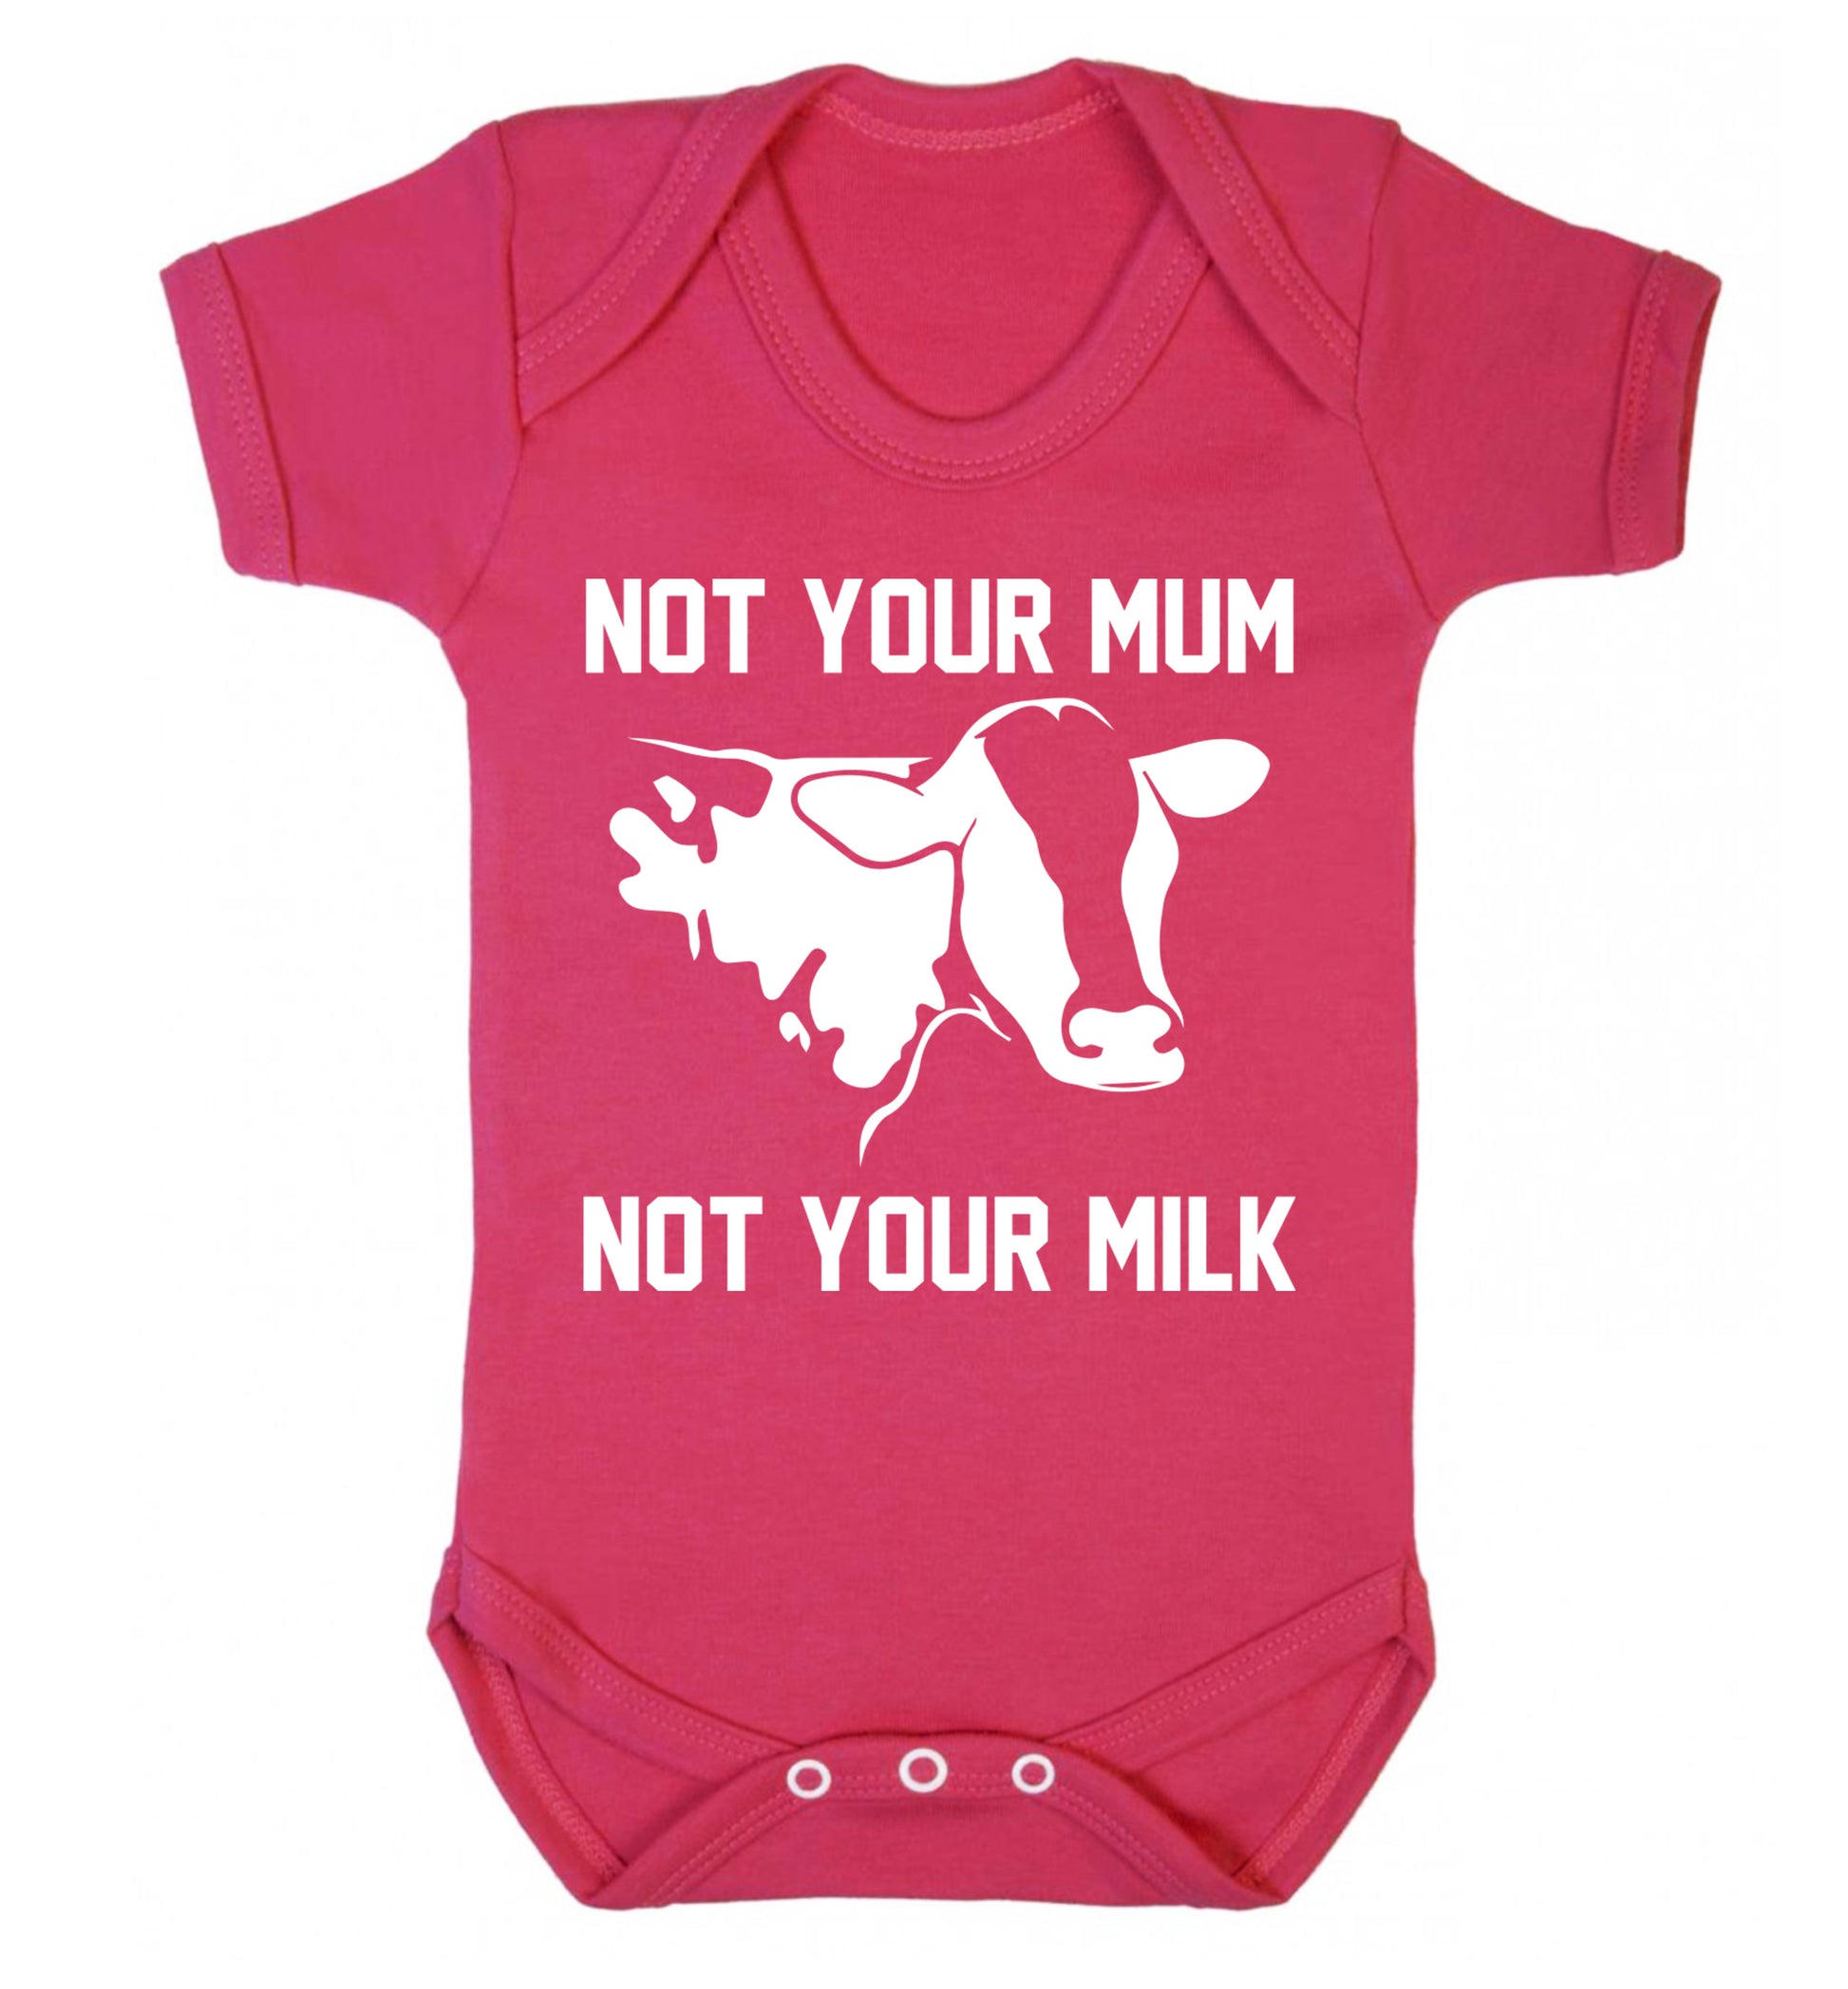 Not your mum not your milk Baby Vest dark pink 18-24 months